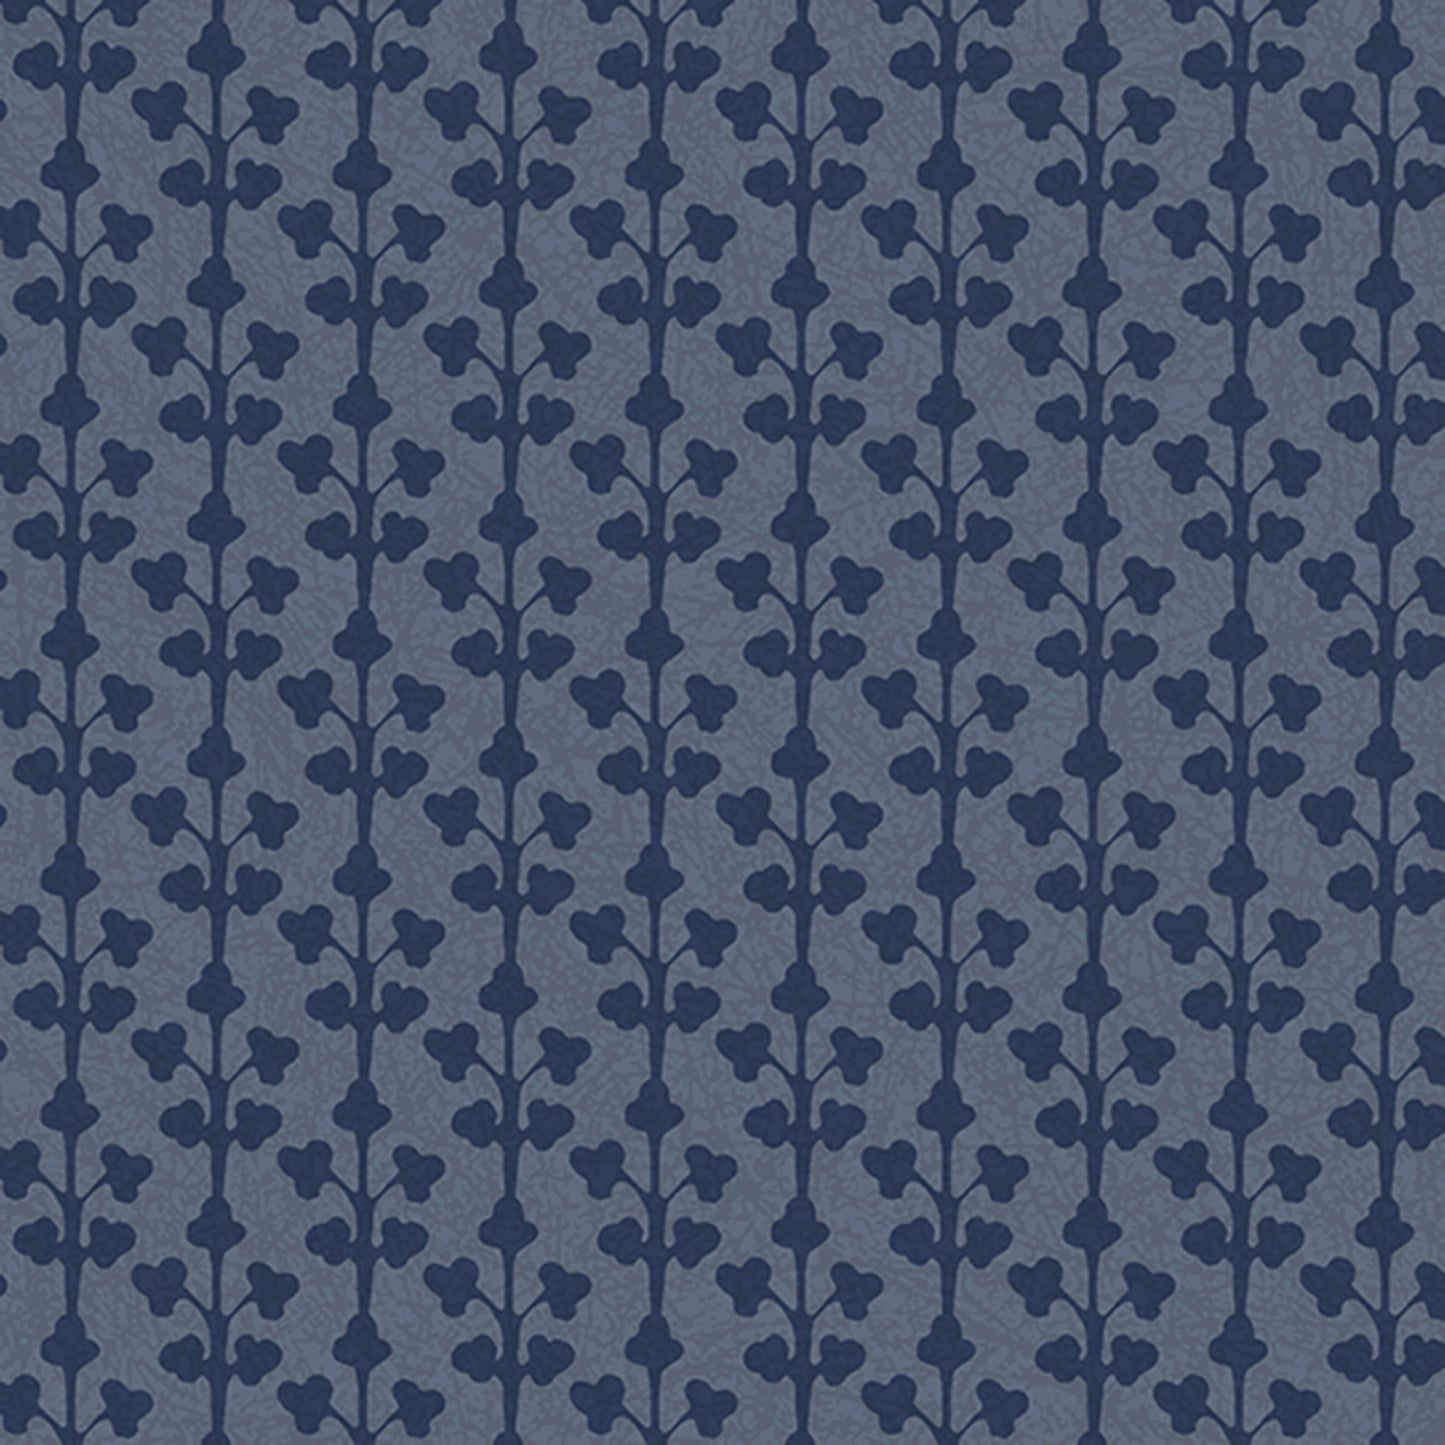 Purchase Laura Ashley Wallpaper Pattern# 118487 Seaham Midnight Blue